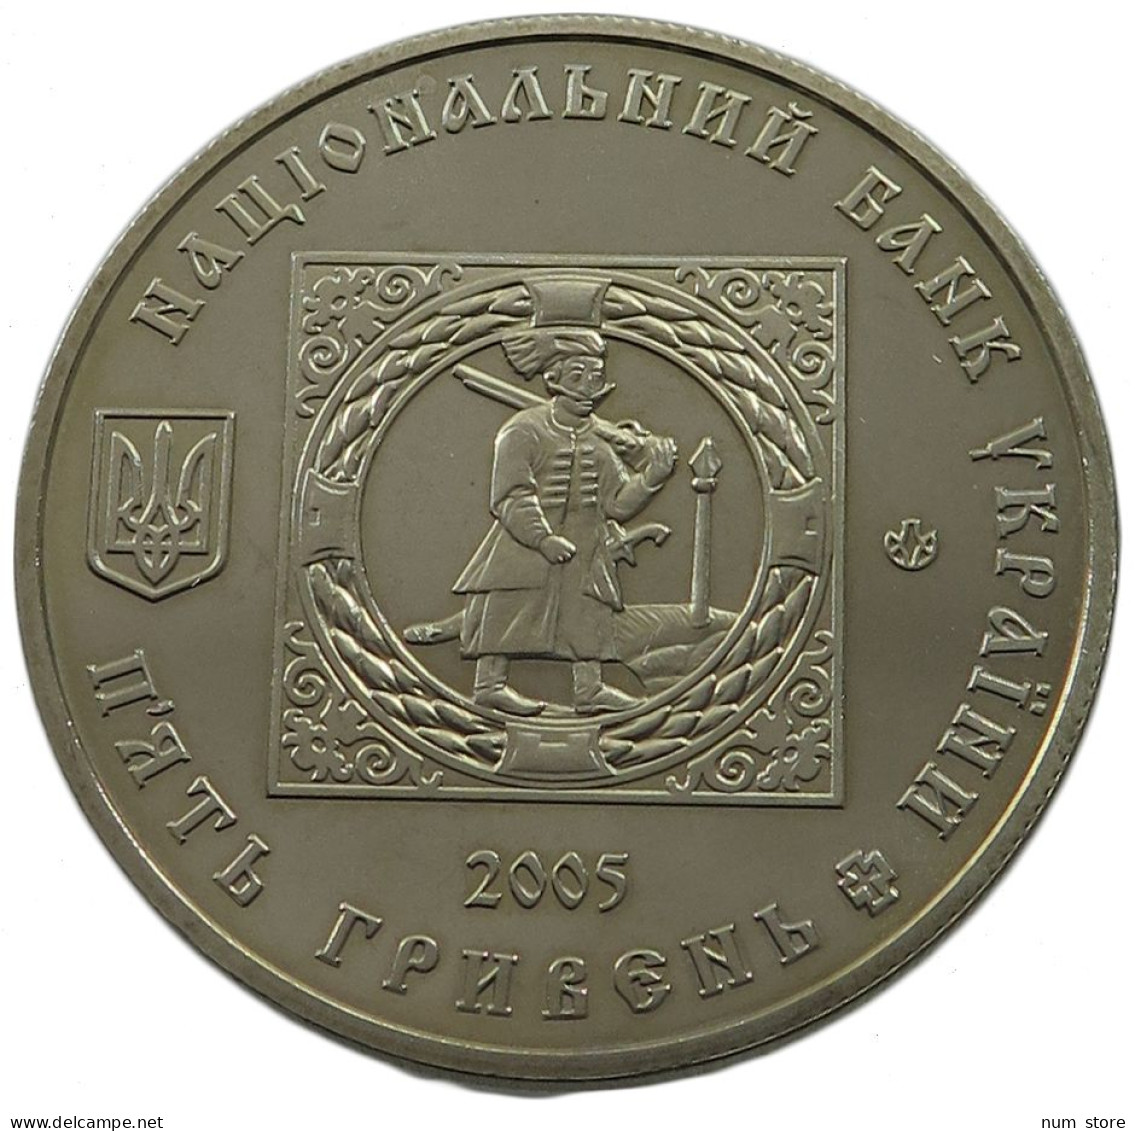 UKRAINE 5 HRYVEN 2005  #w032 0553 - Ukraine